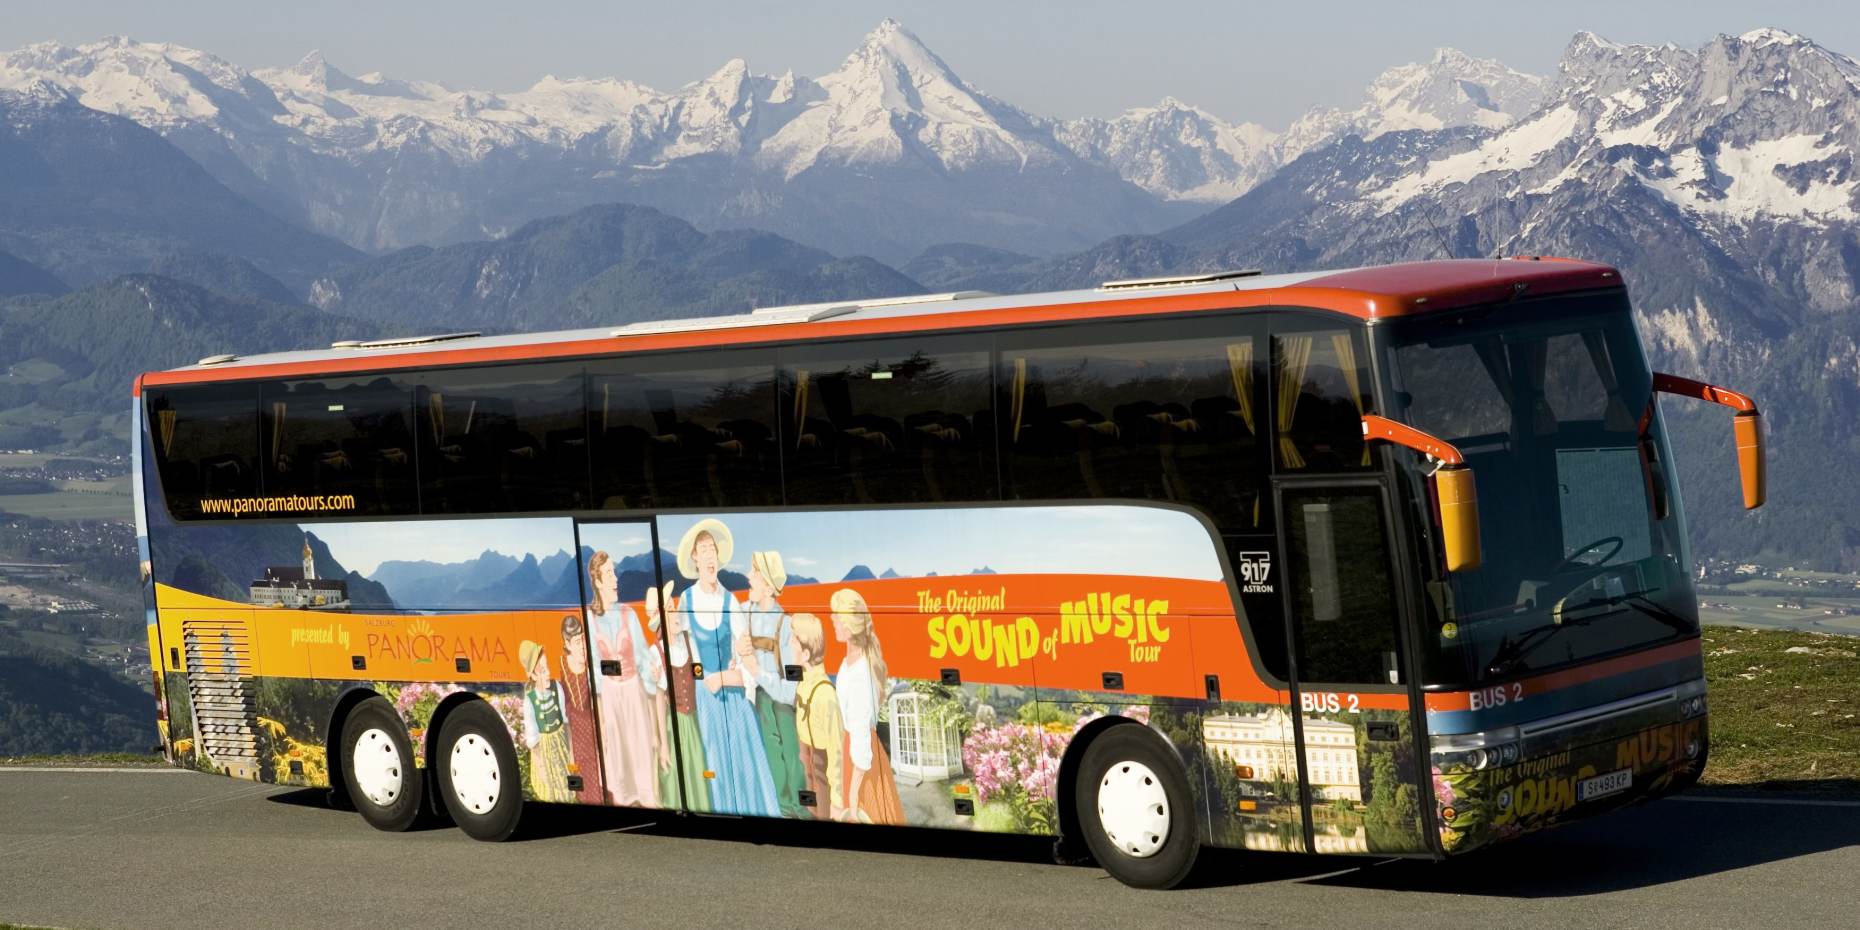 salzburg tours by bus